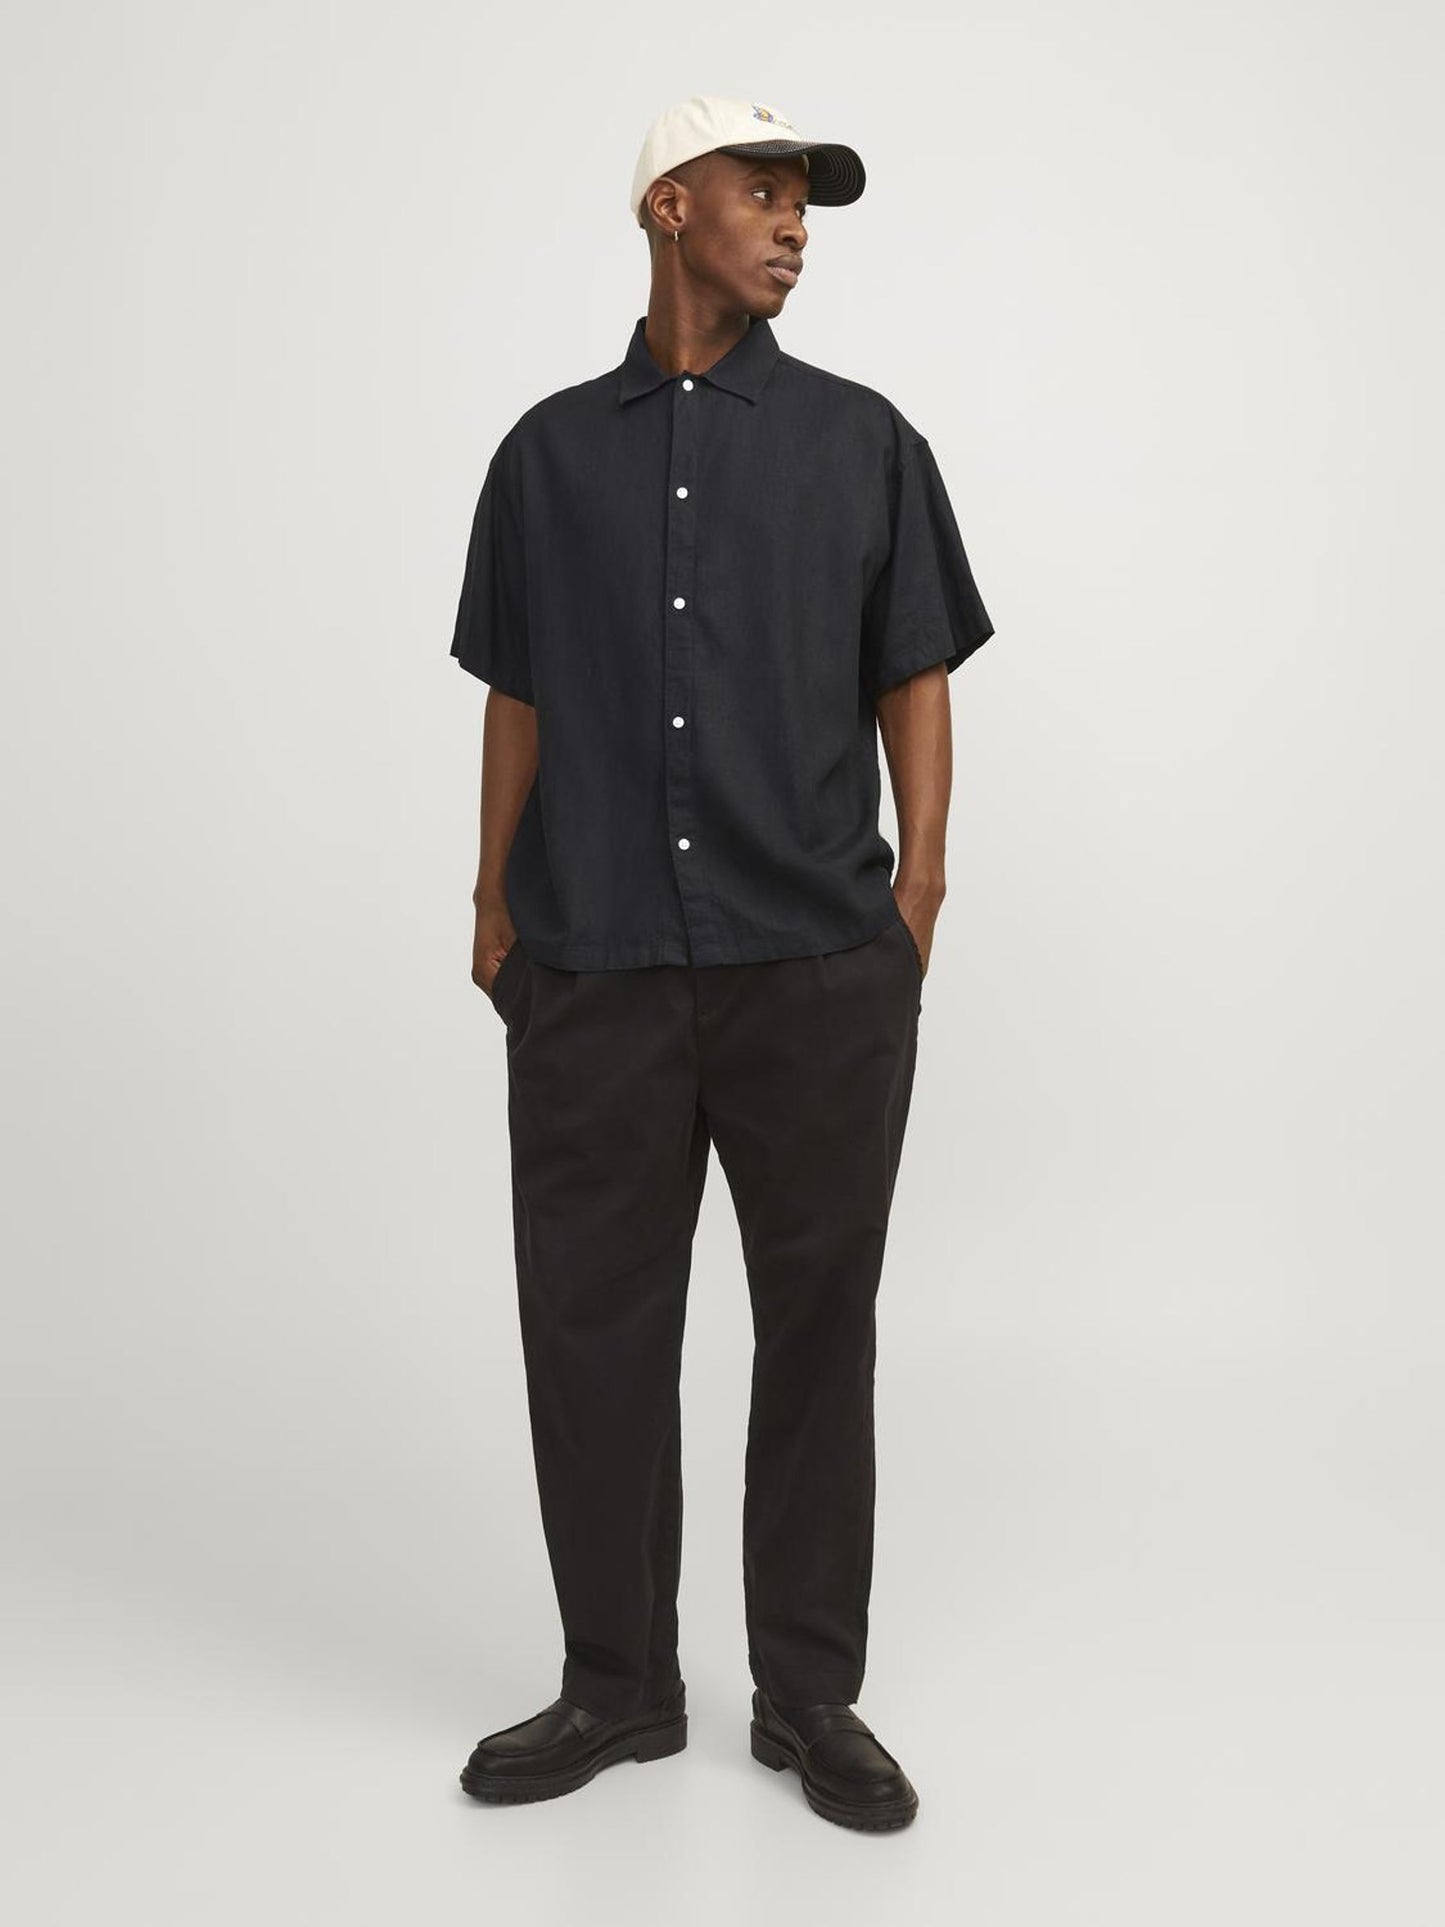 m tops - JACK JONES - Faro Linen Oversized Shirt - PLENTY